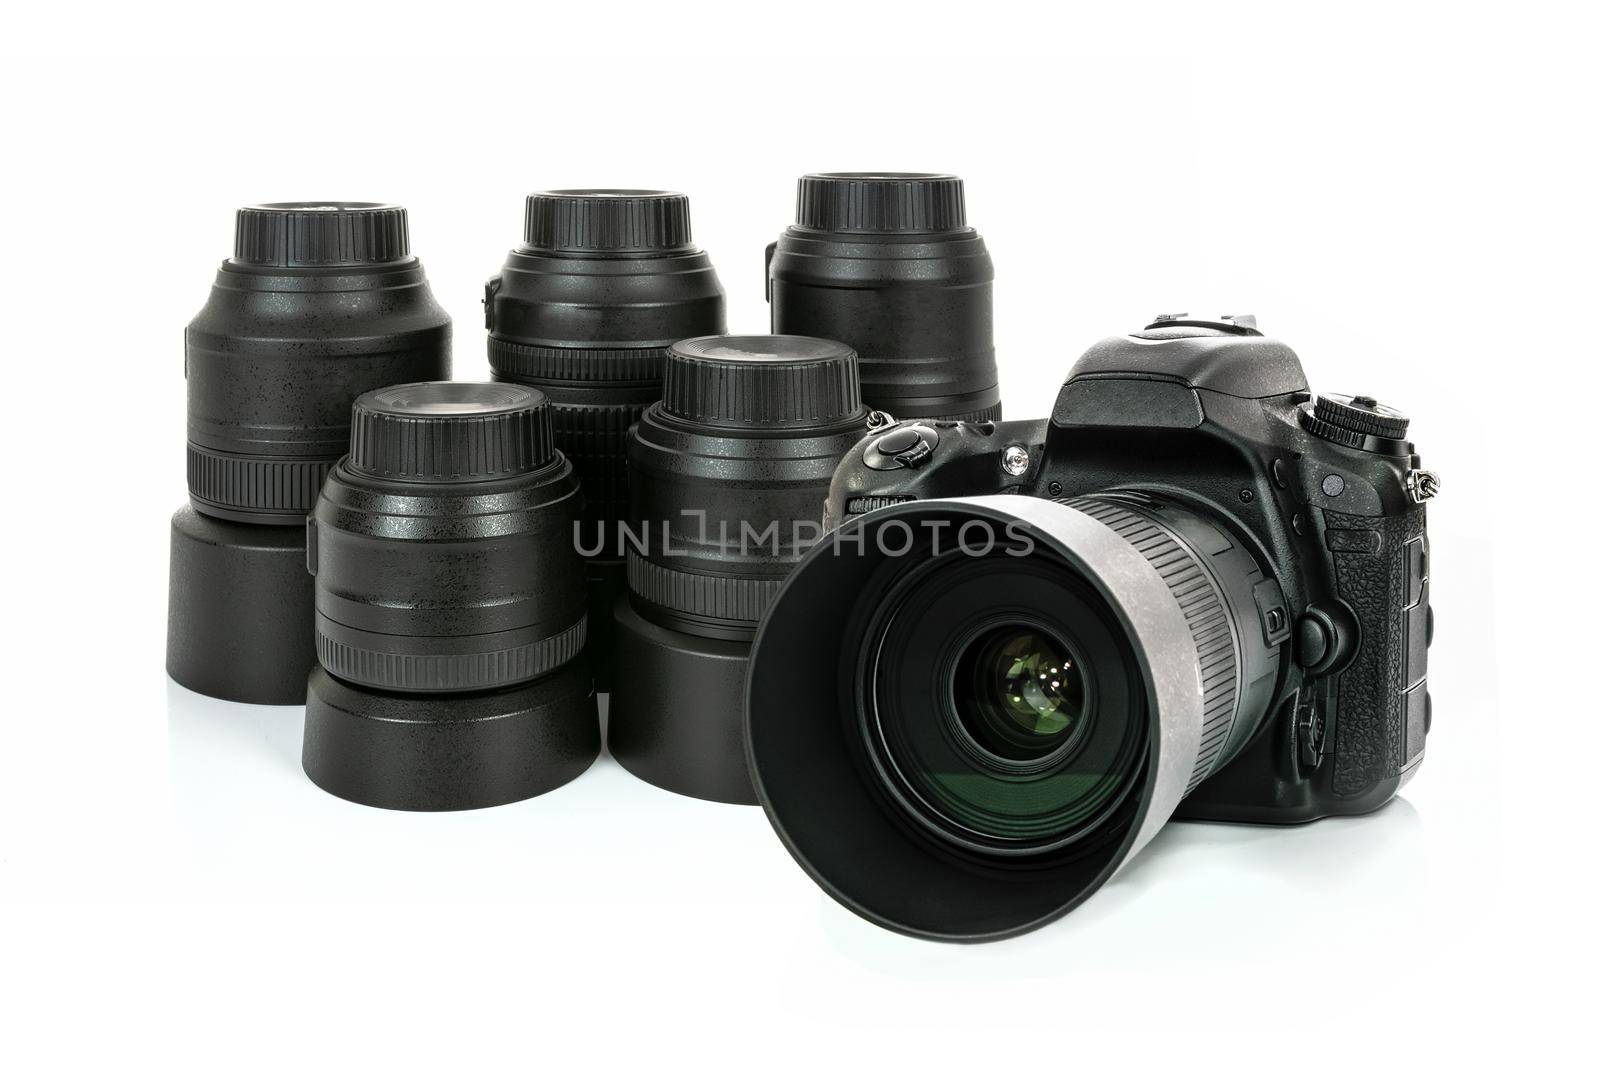 Professional photographic equipment by wdnet_studio